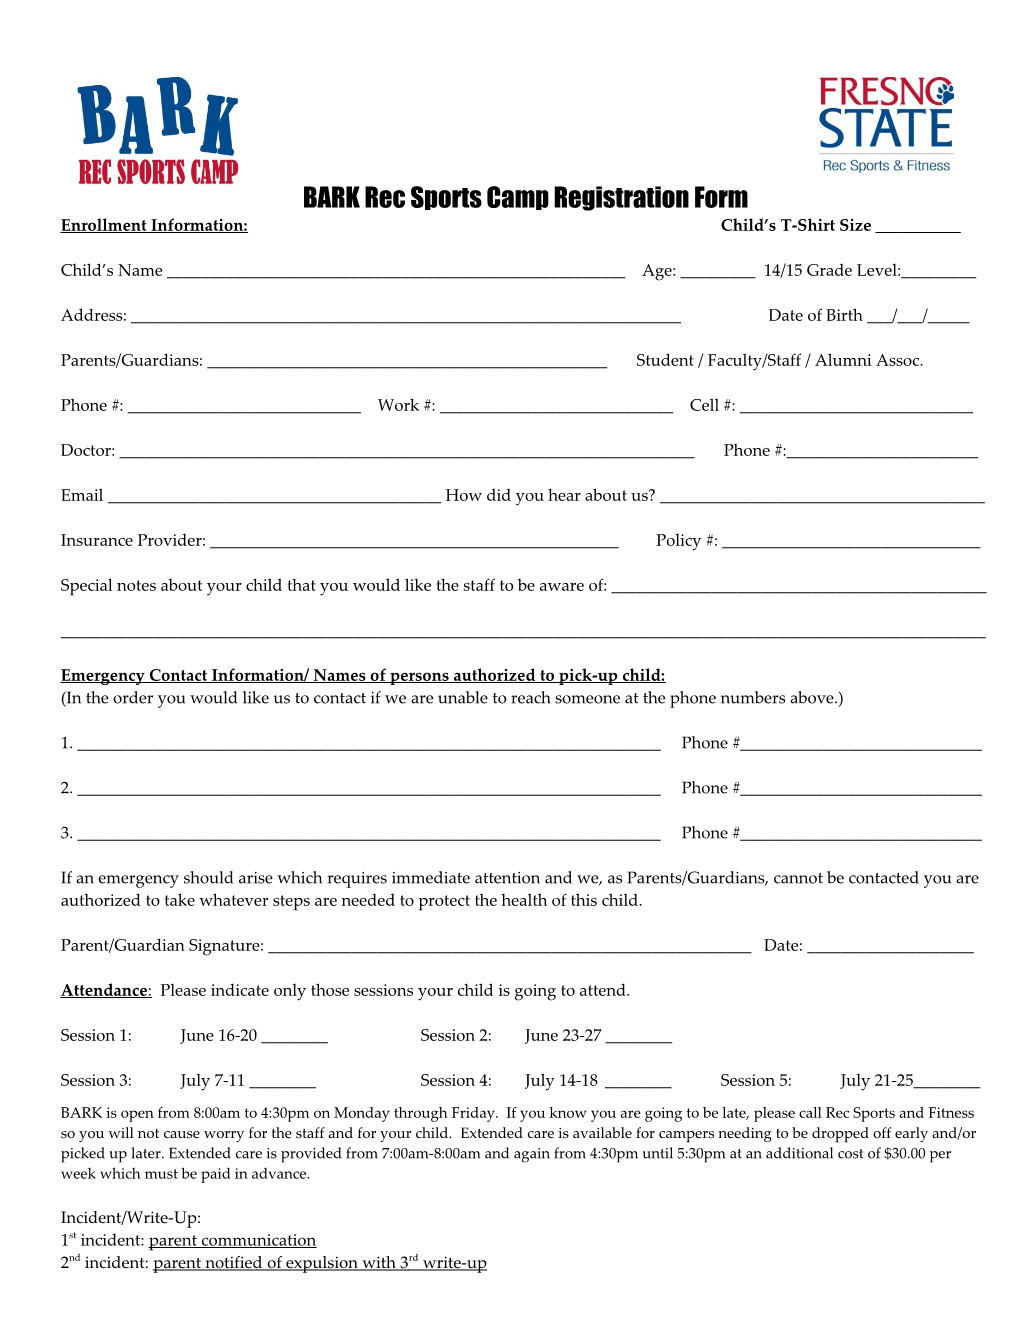 BARK Rec Sports Camp Registration Form